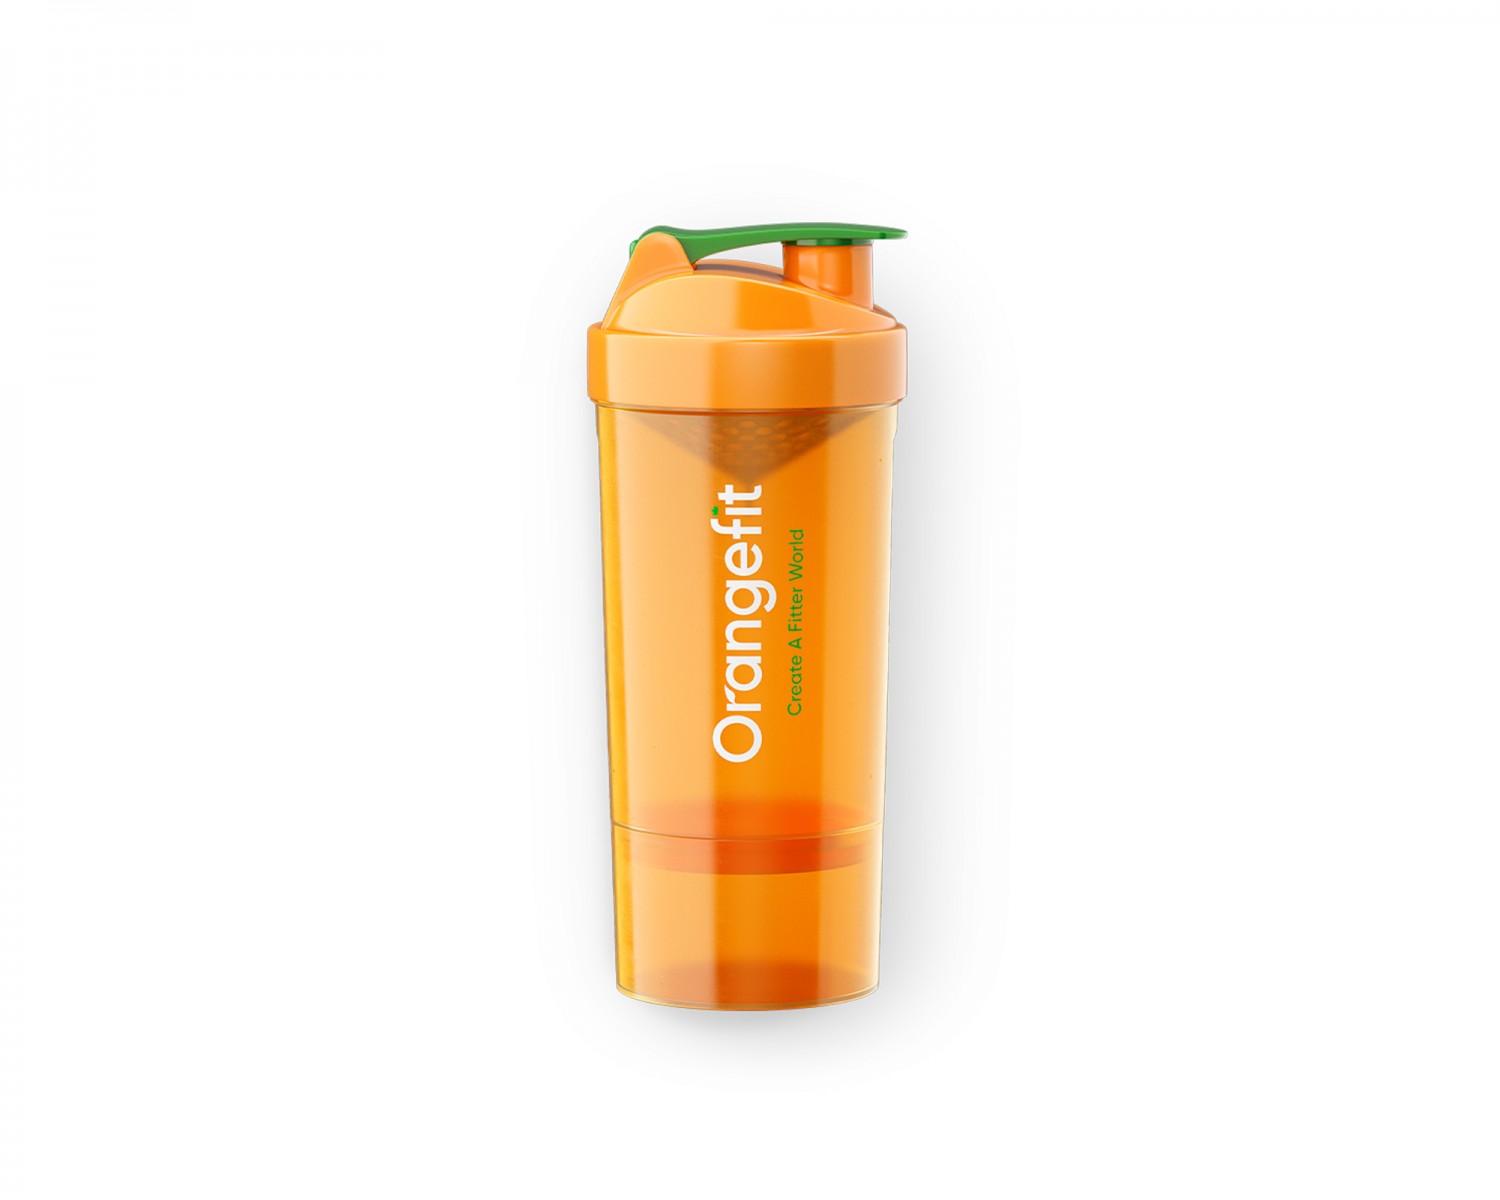 Orangefit Fit Shaker